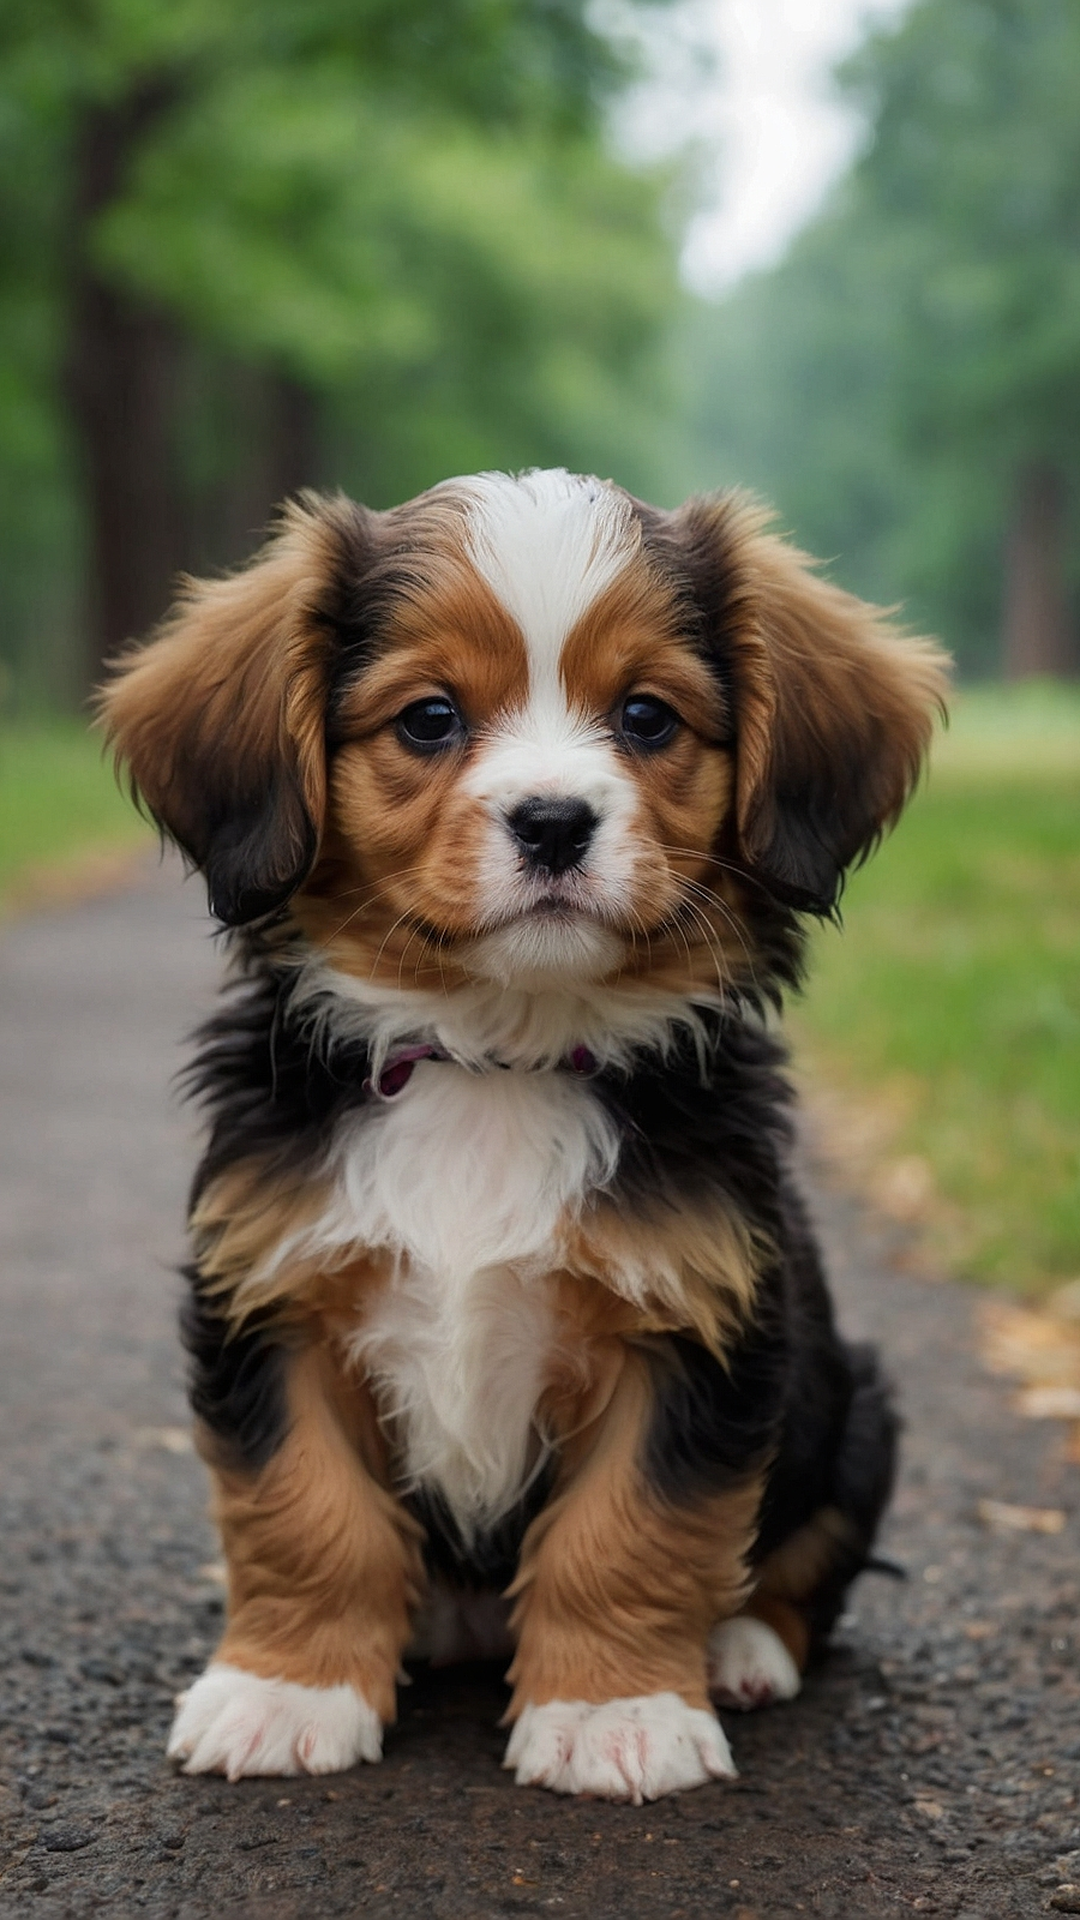 Cuddle-worthy Cuties: Puppies Edition